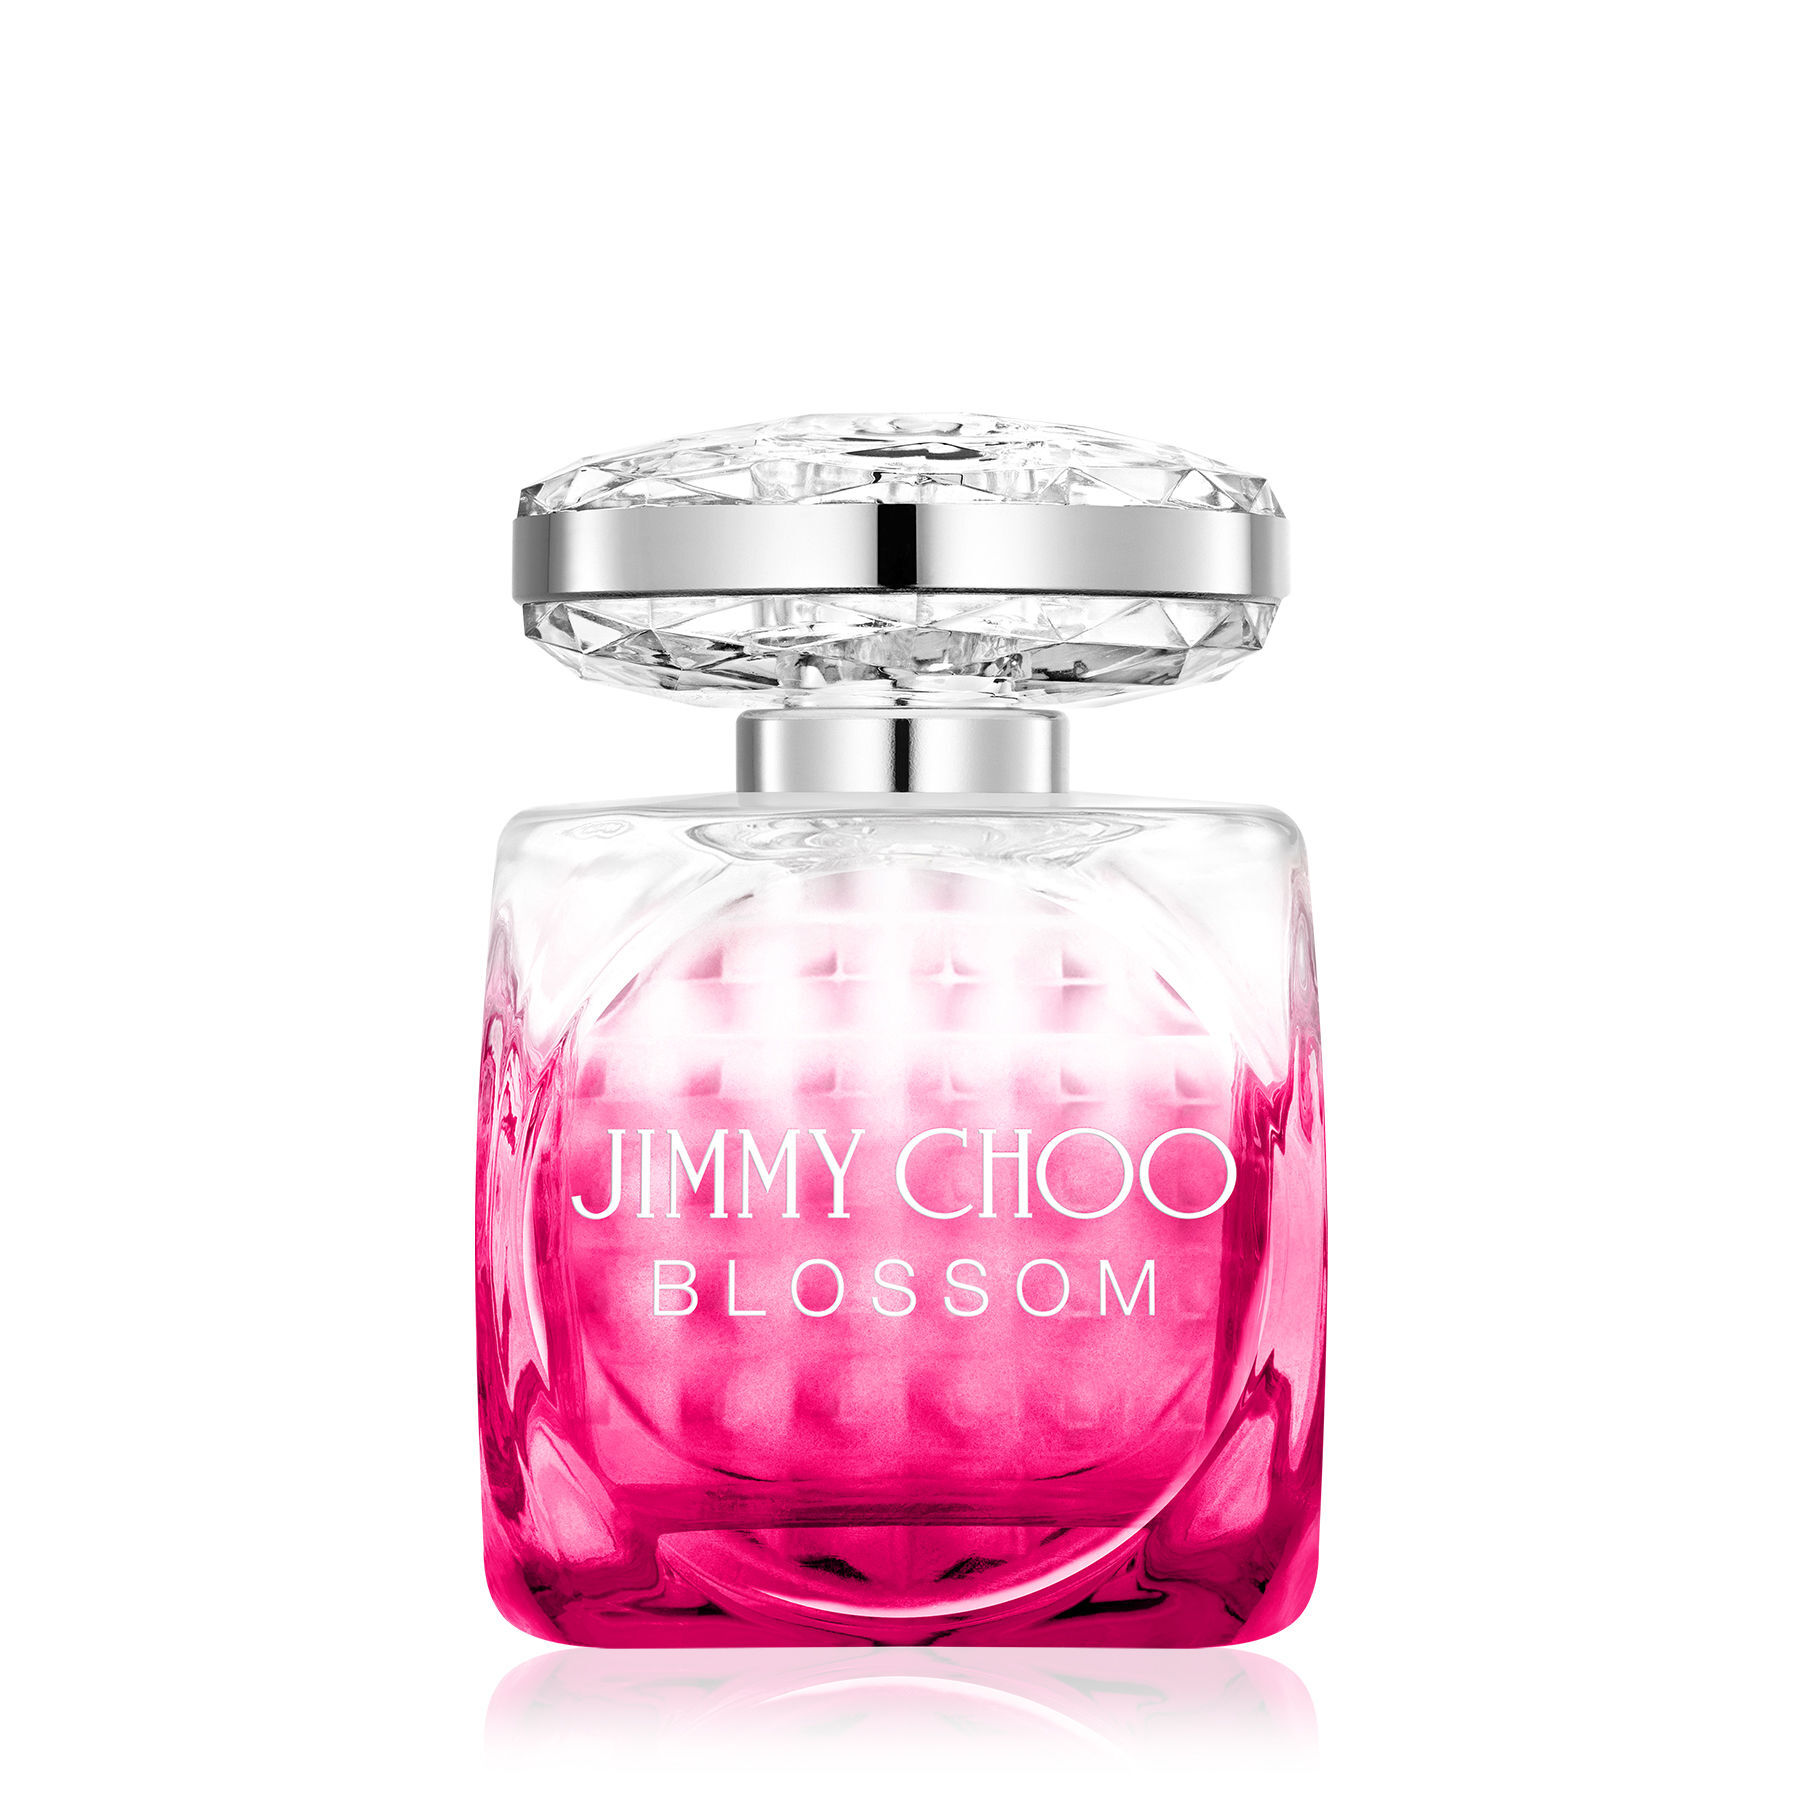 Jimmy Choo Blossom eau de parfum / 100 ml / dames